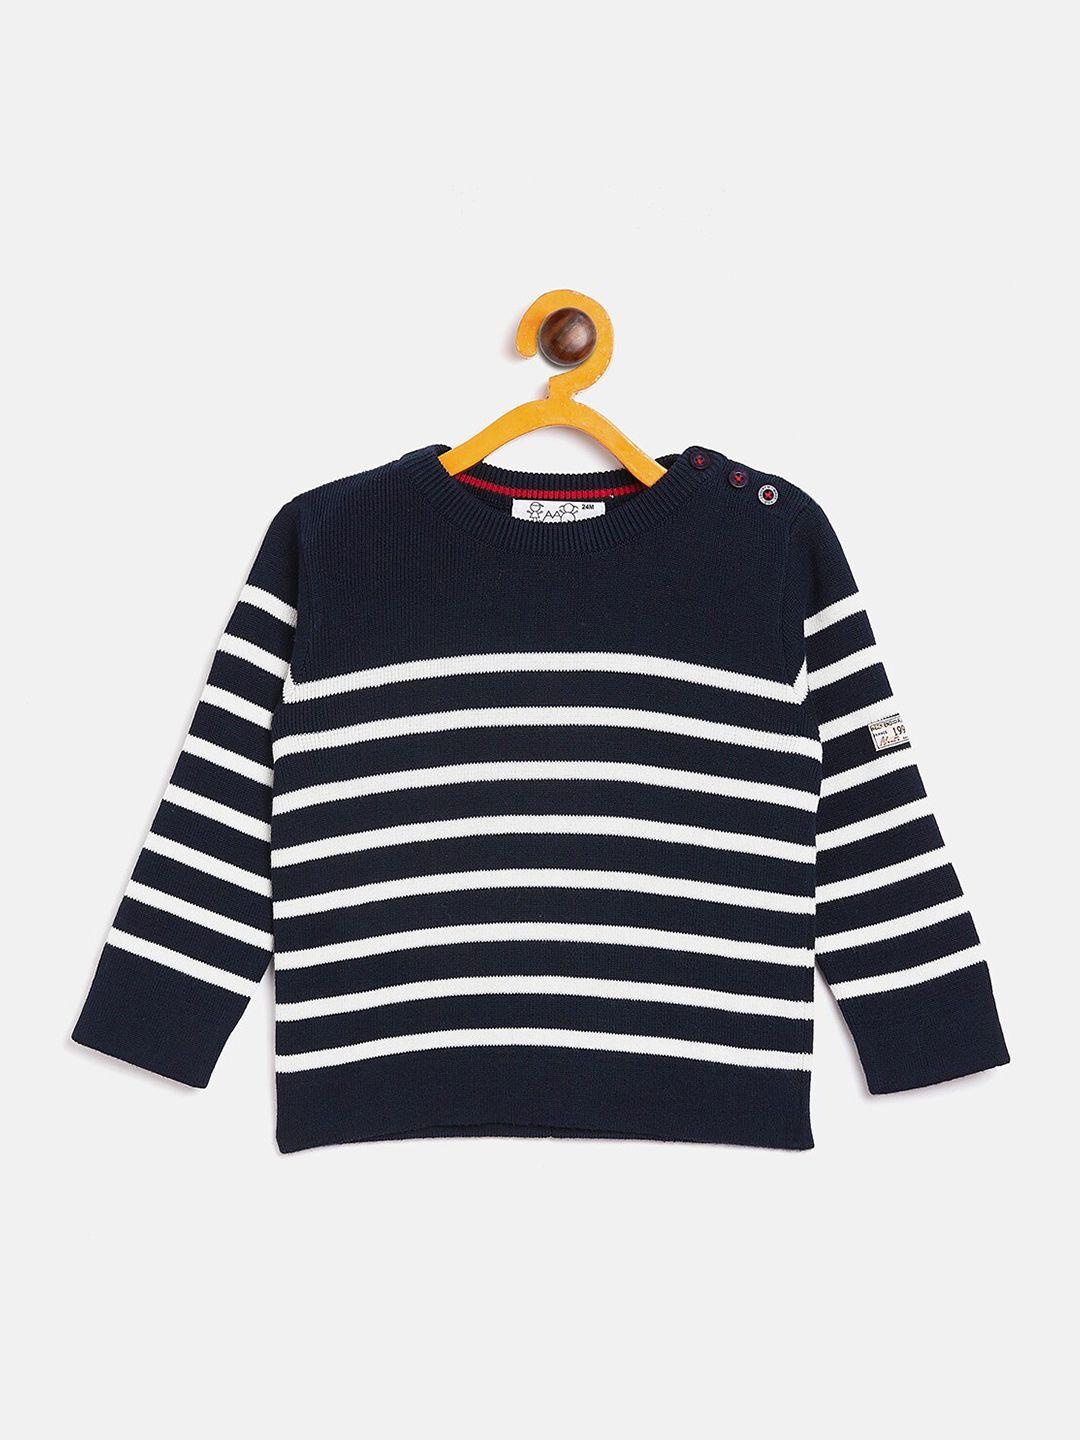 jwaaq unisex kids navy blue & white striped pullover